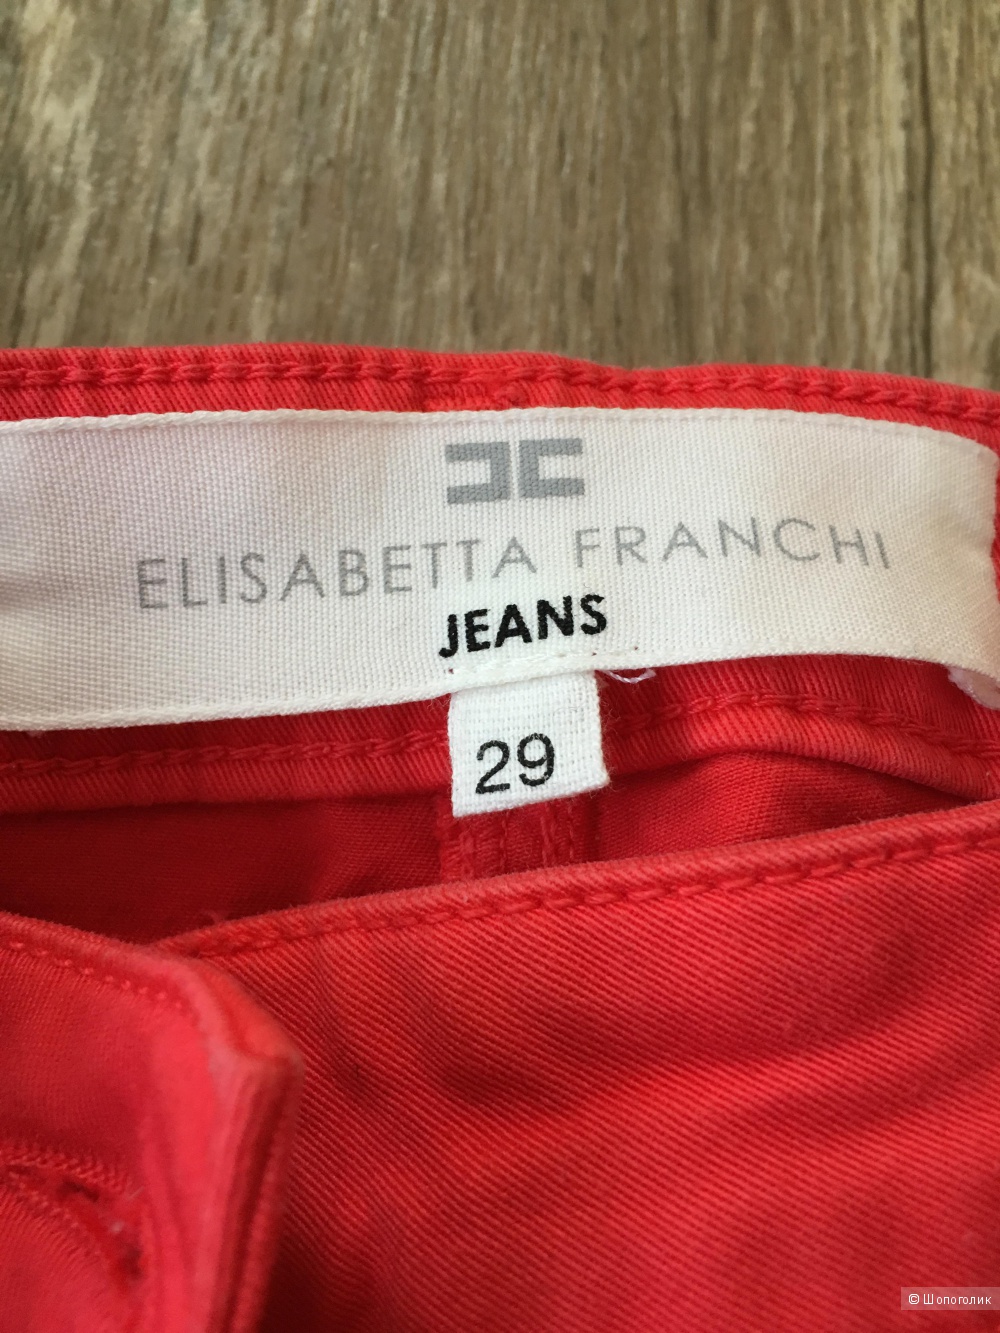 Джинсы, Elizabeth Franchi, 29 размер